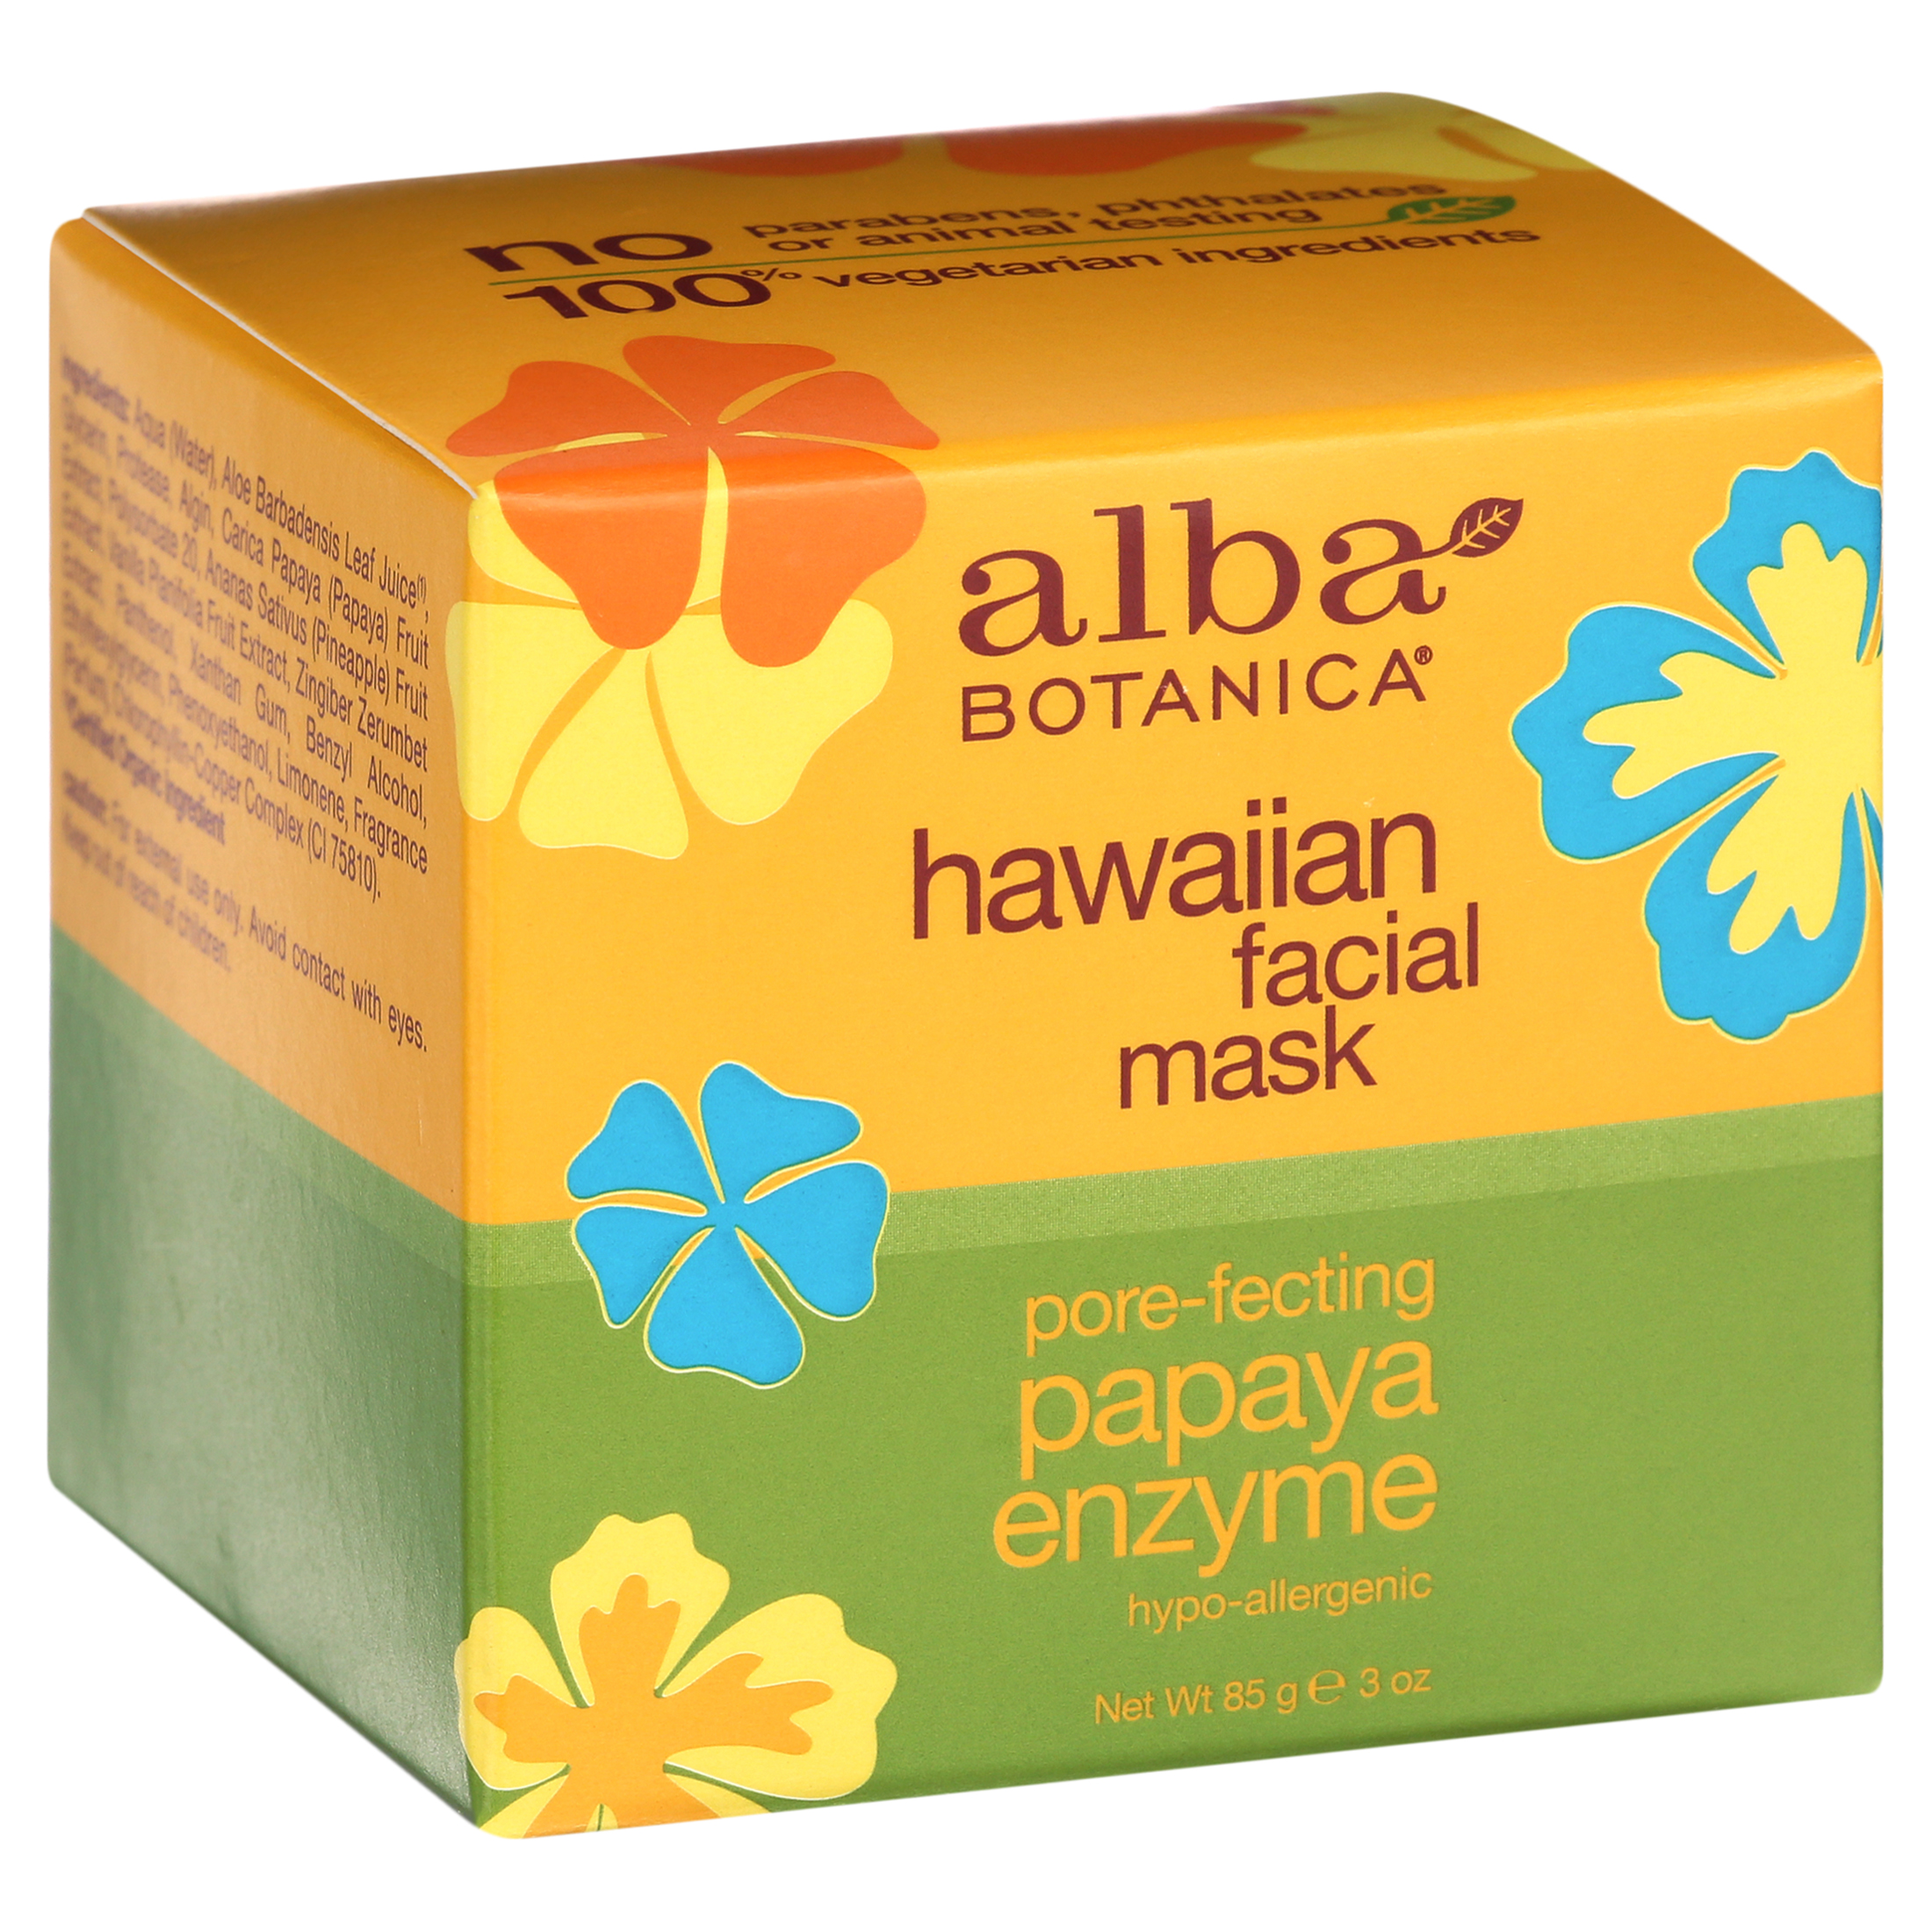 Alba Botanica Pore-Fecting Papaya Enzyme Hawaiian Facial Mask, 3 oz. - image 3 of 7